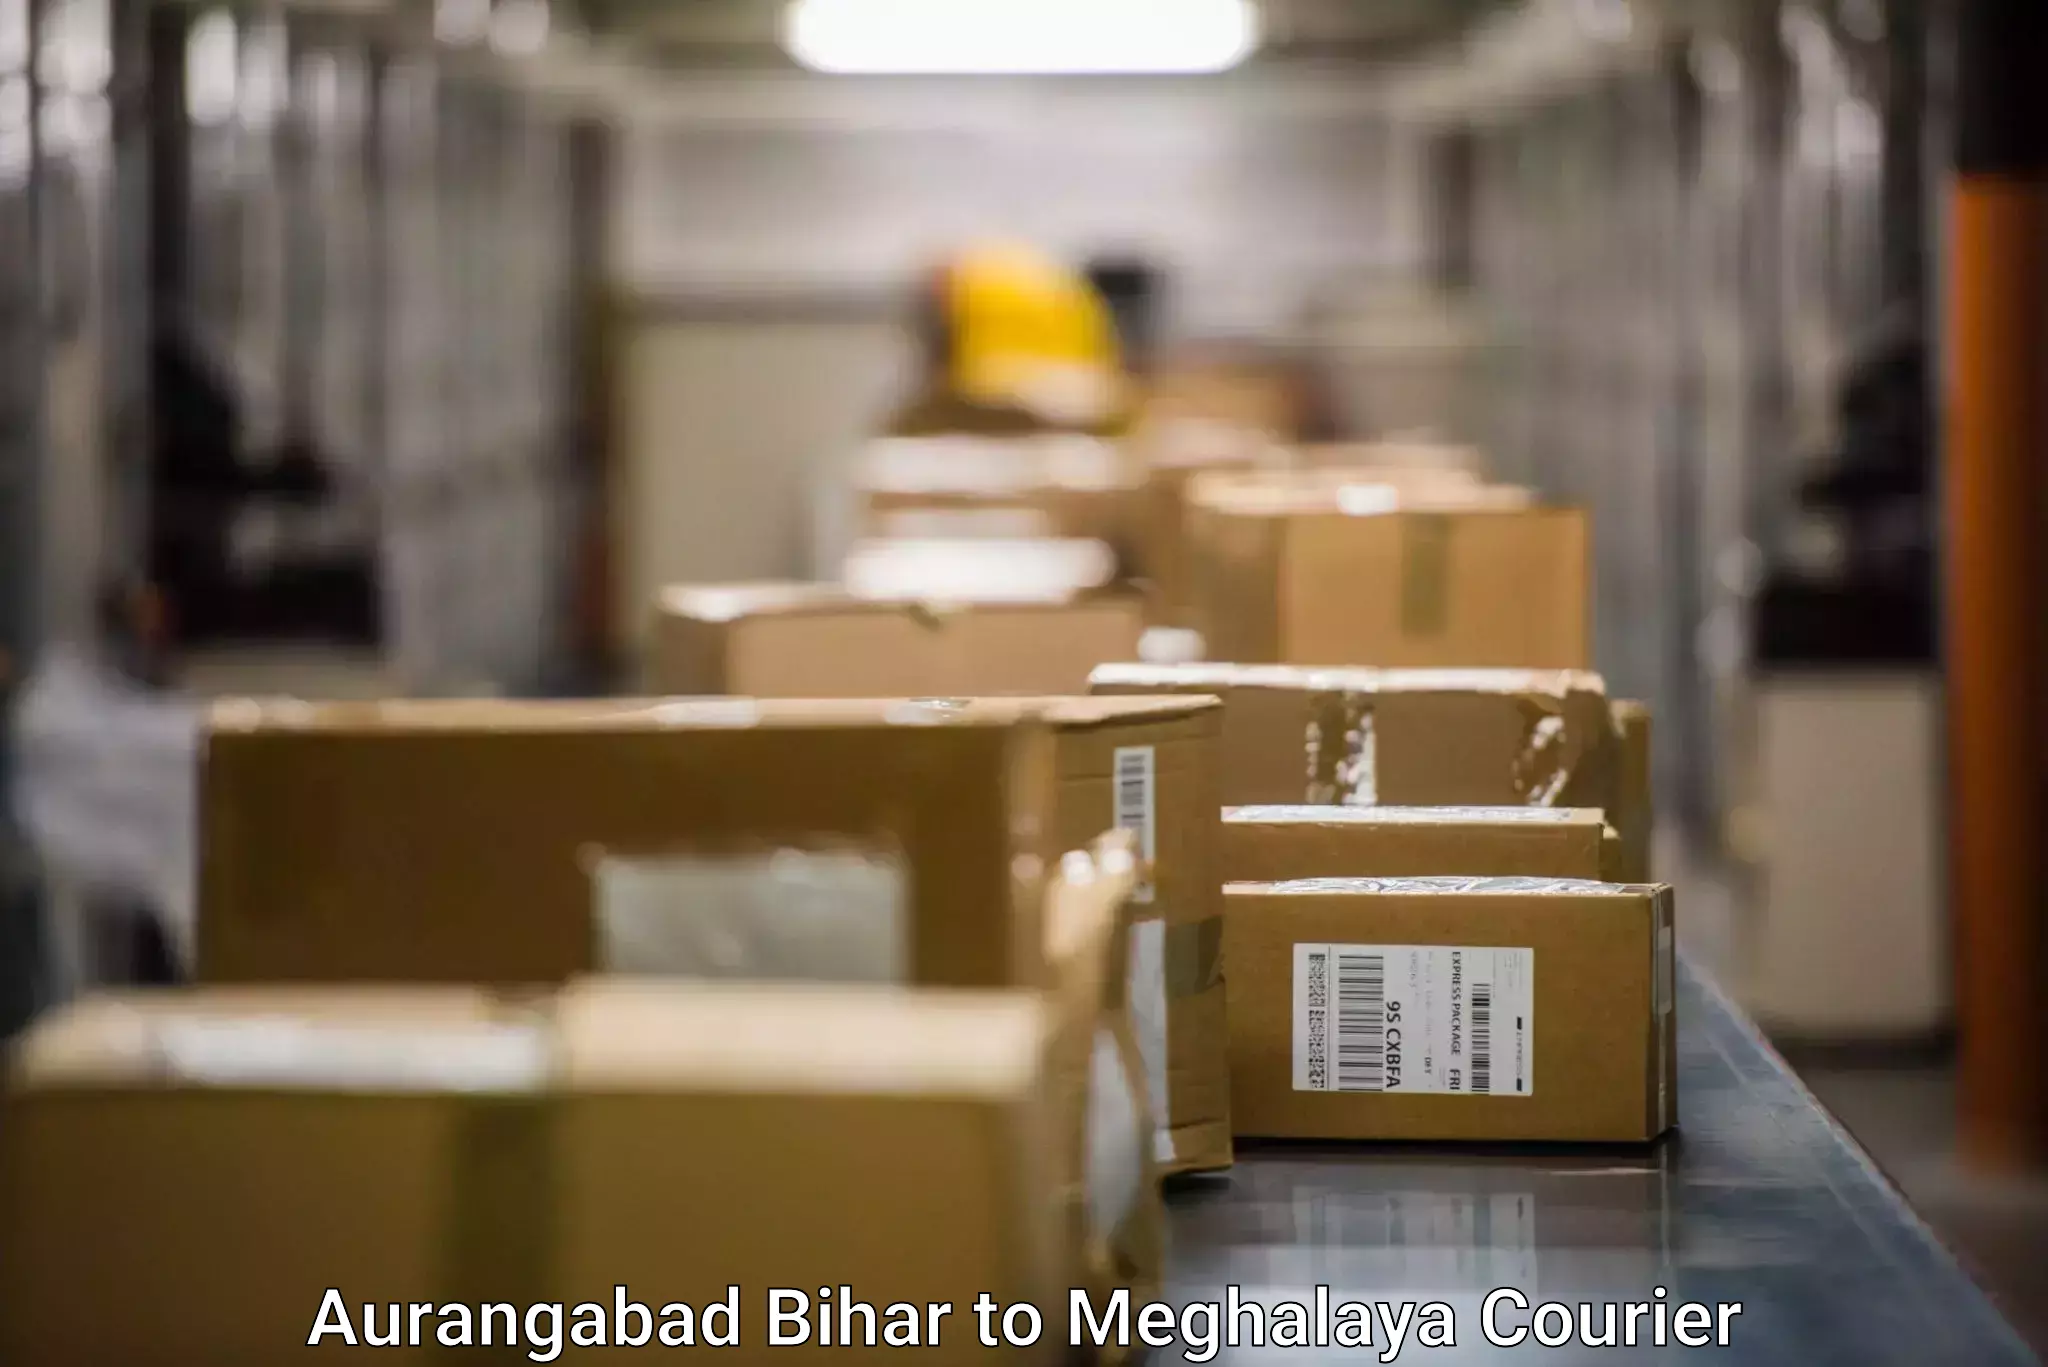 Ocean freight courier Aurangabad Bihar to Williamnagar